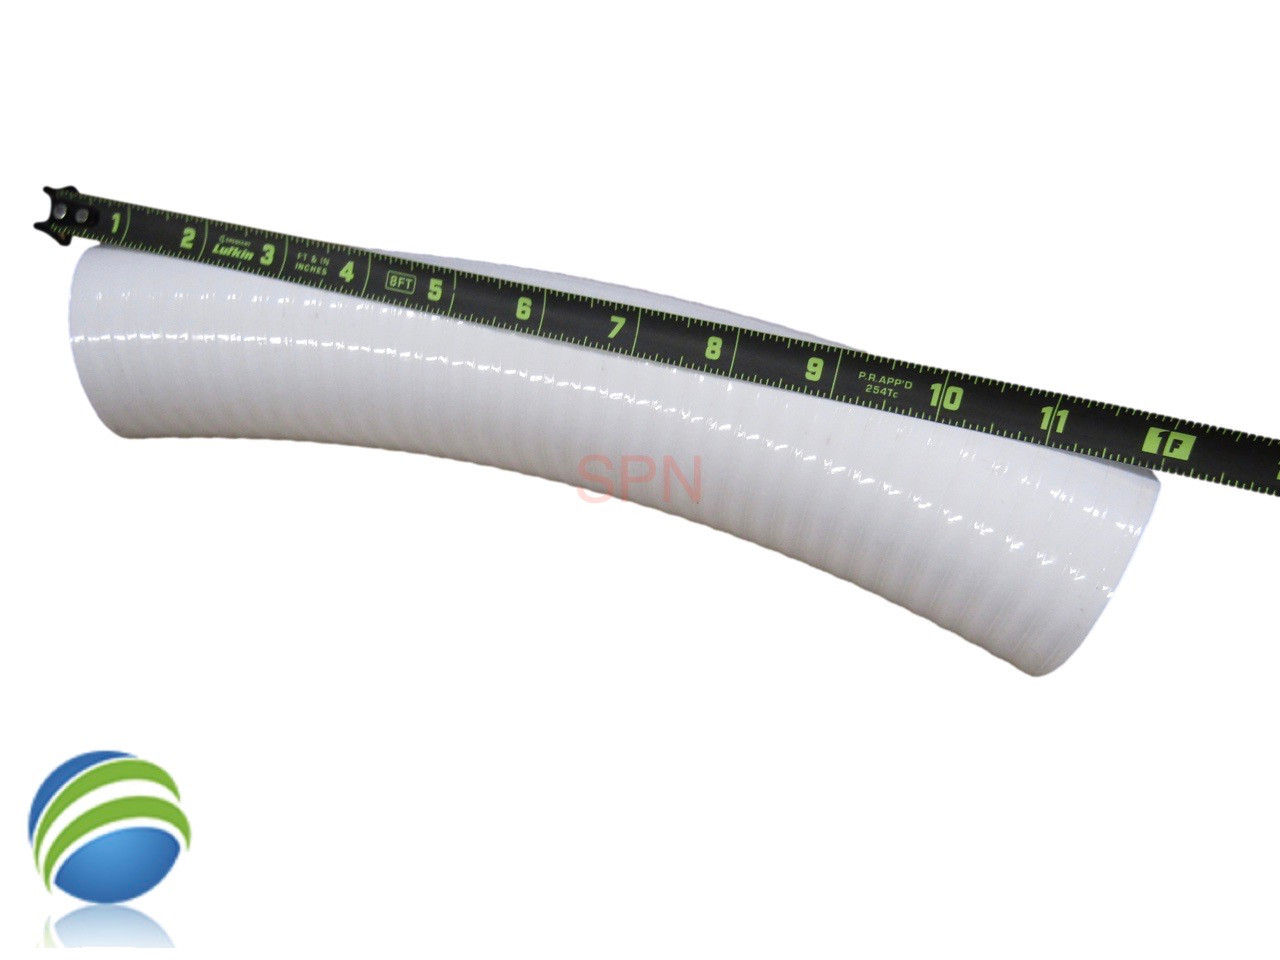 2" Flex Pipe, 12" length for Manifolds, Slice Valves or Unions